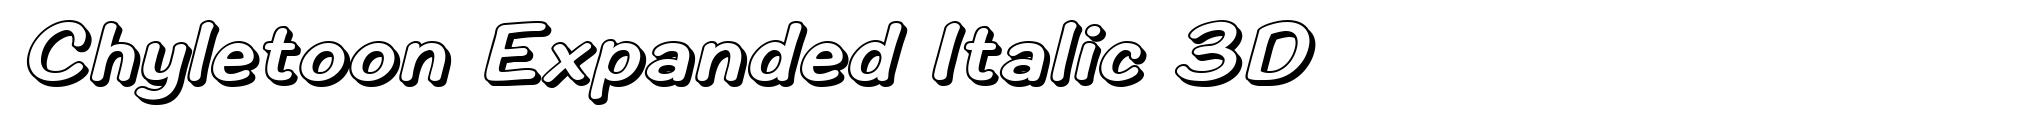 Chyletoon Expanded Italic 3D image